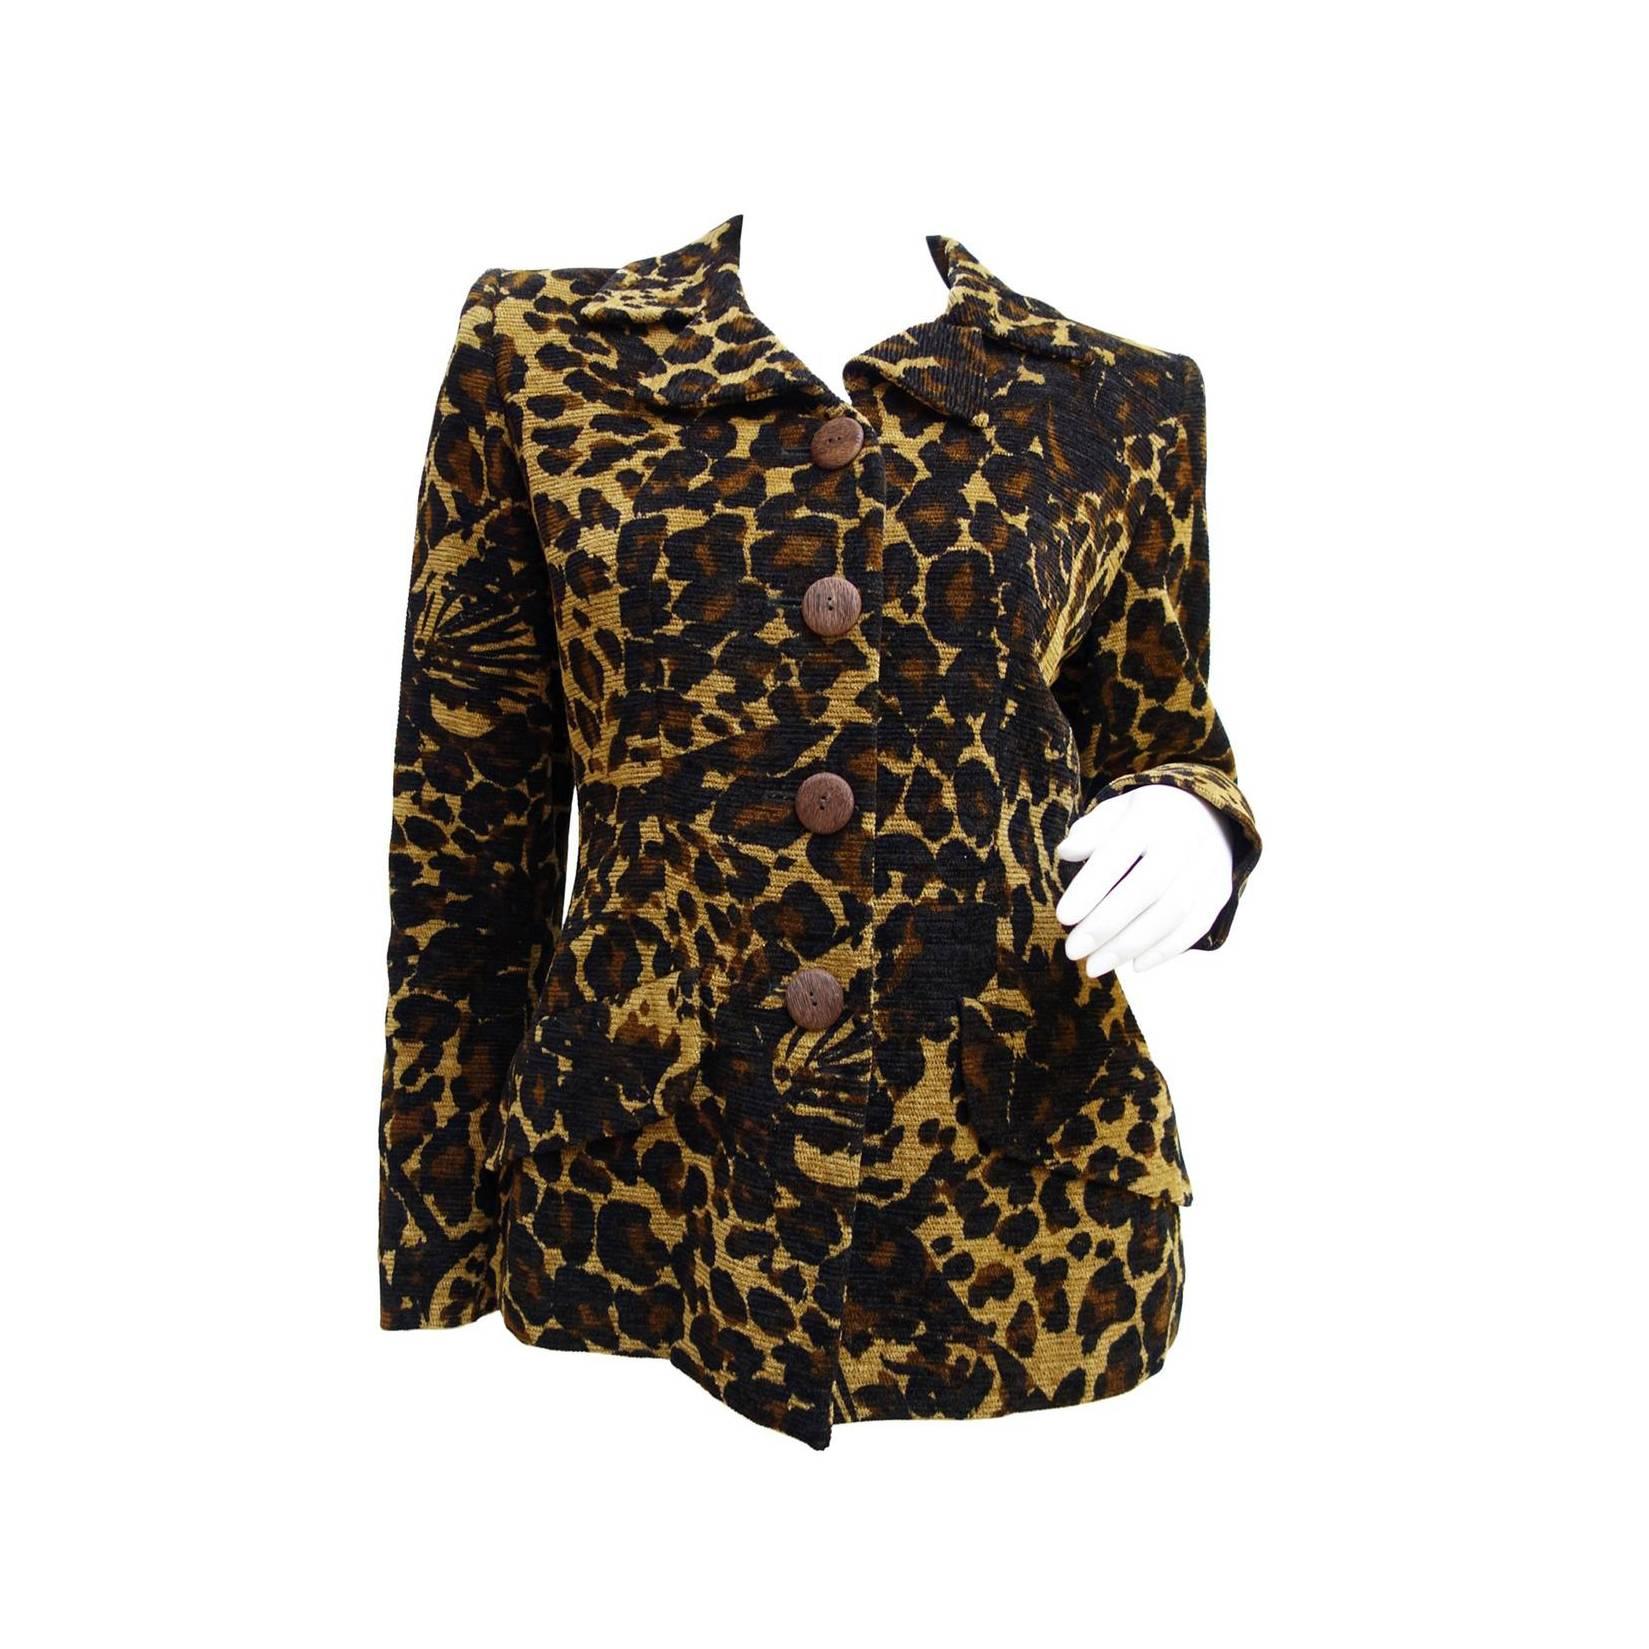 Vintage Yves Saint Lauren Rive Gauche Leopard Print Jacket Blazer Size 36 FR